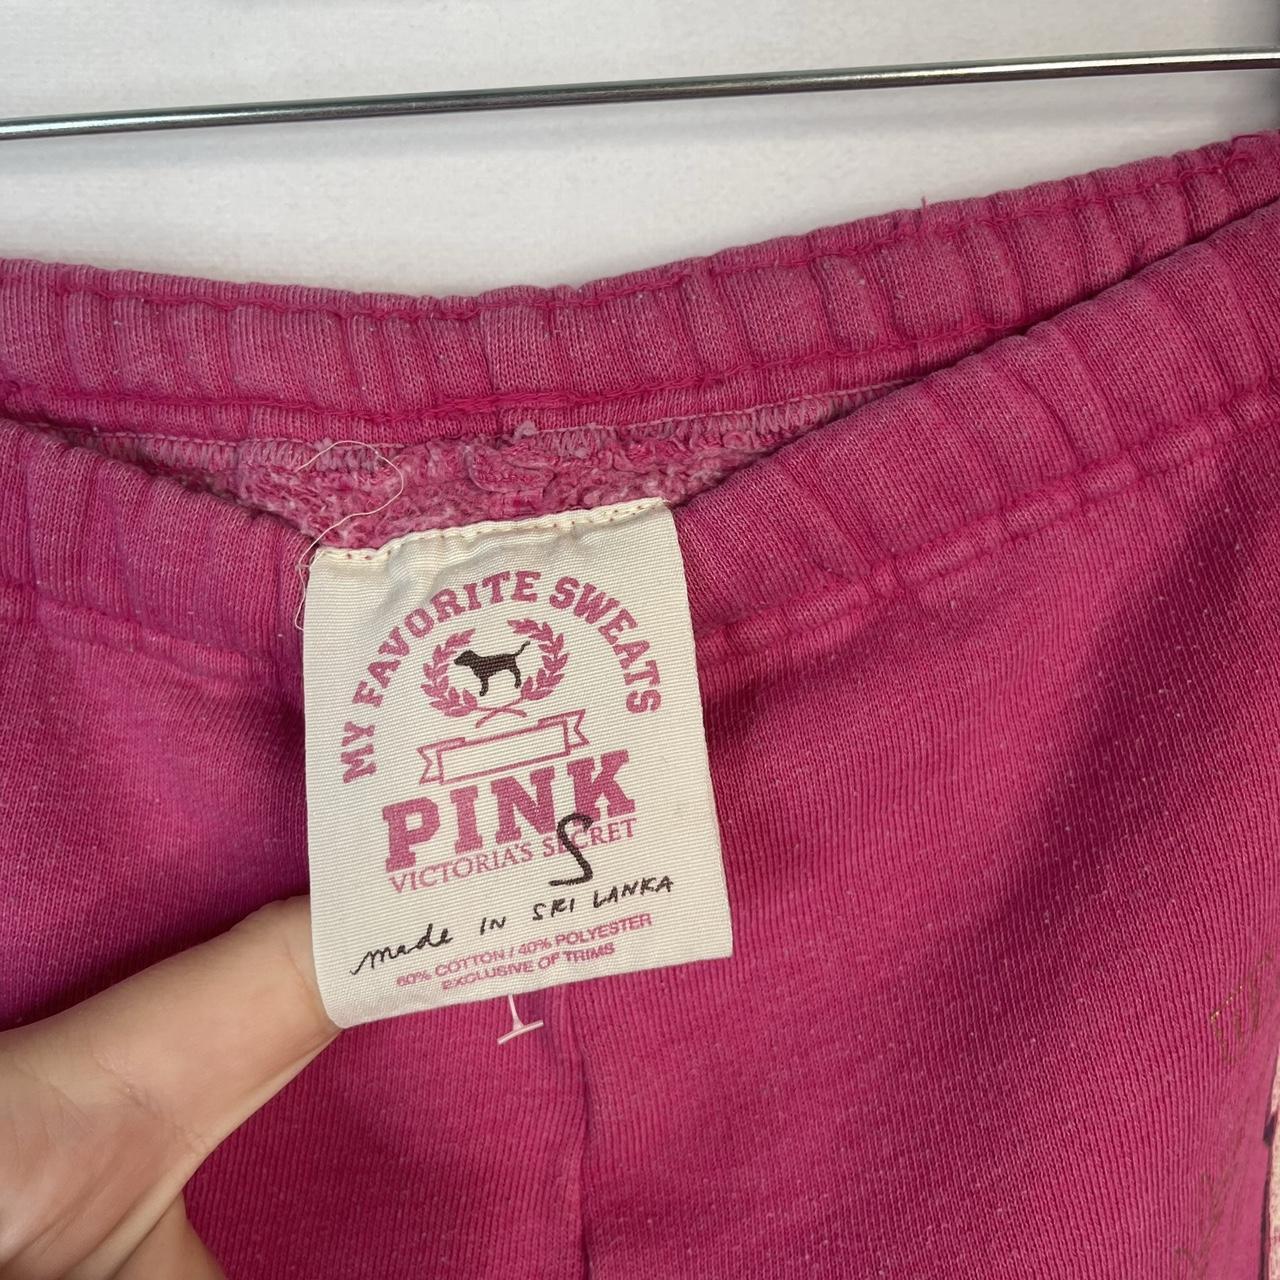 2000s Victoria's Secret PINK sweatpants “my - Depop